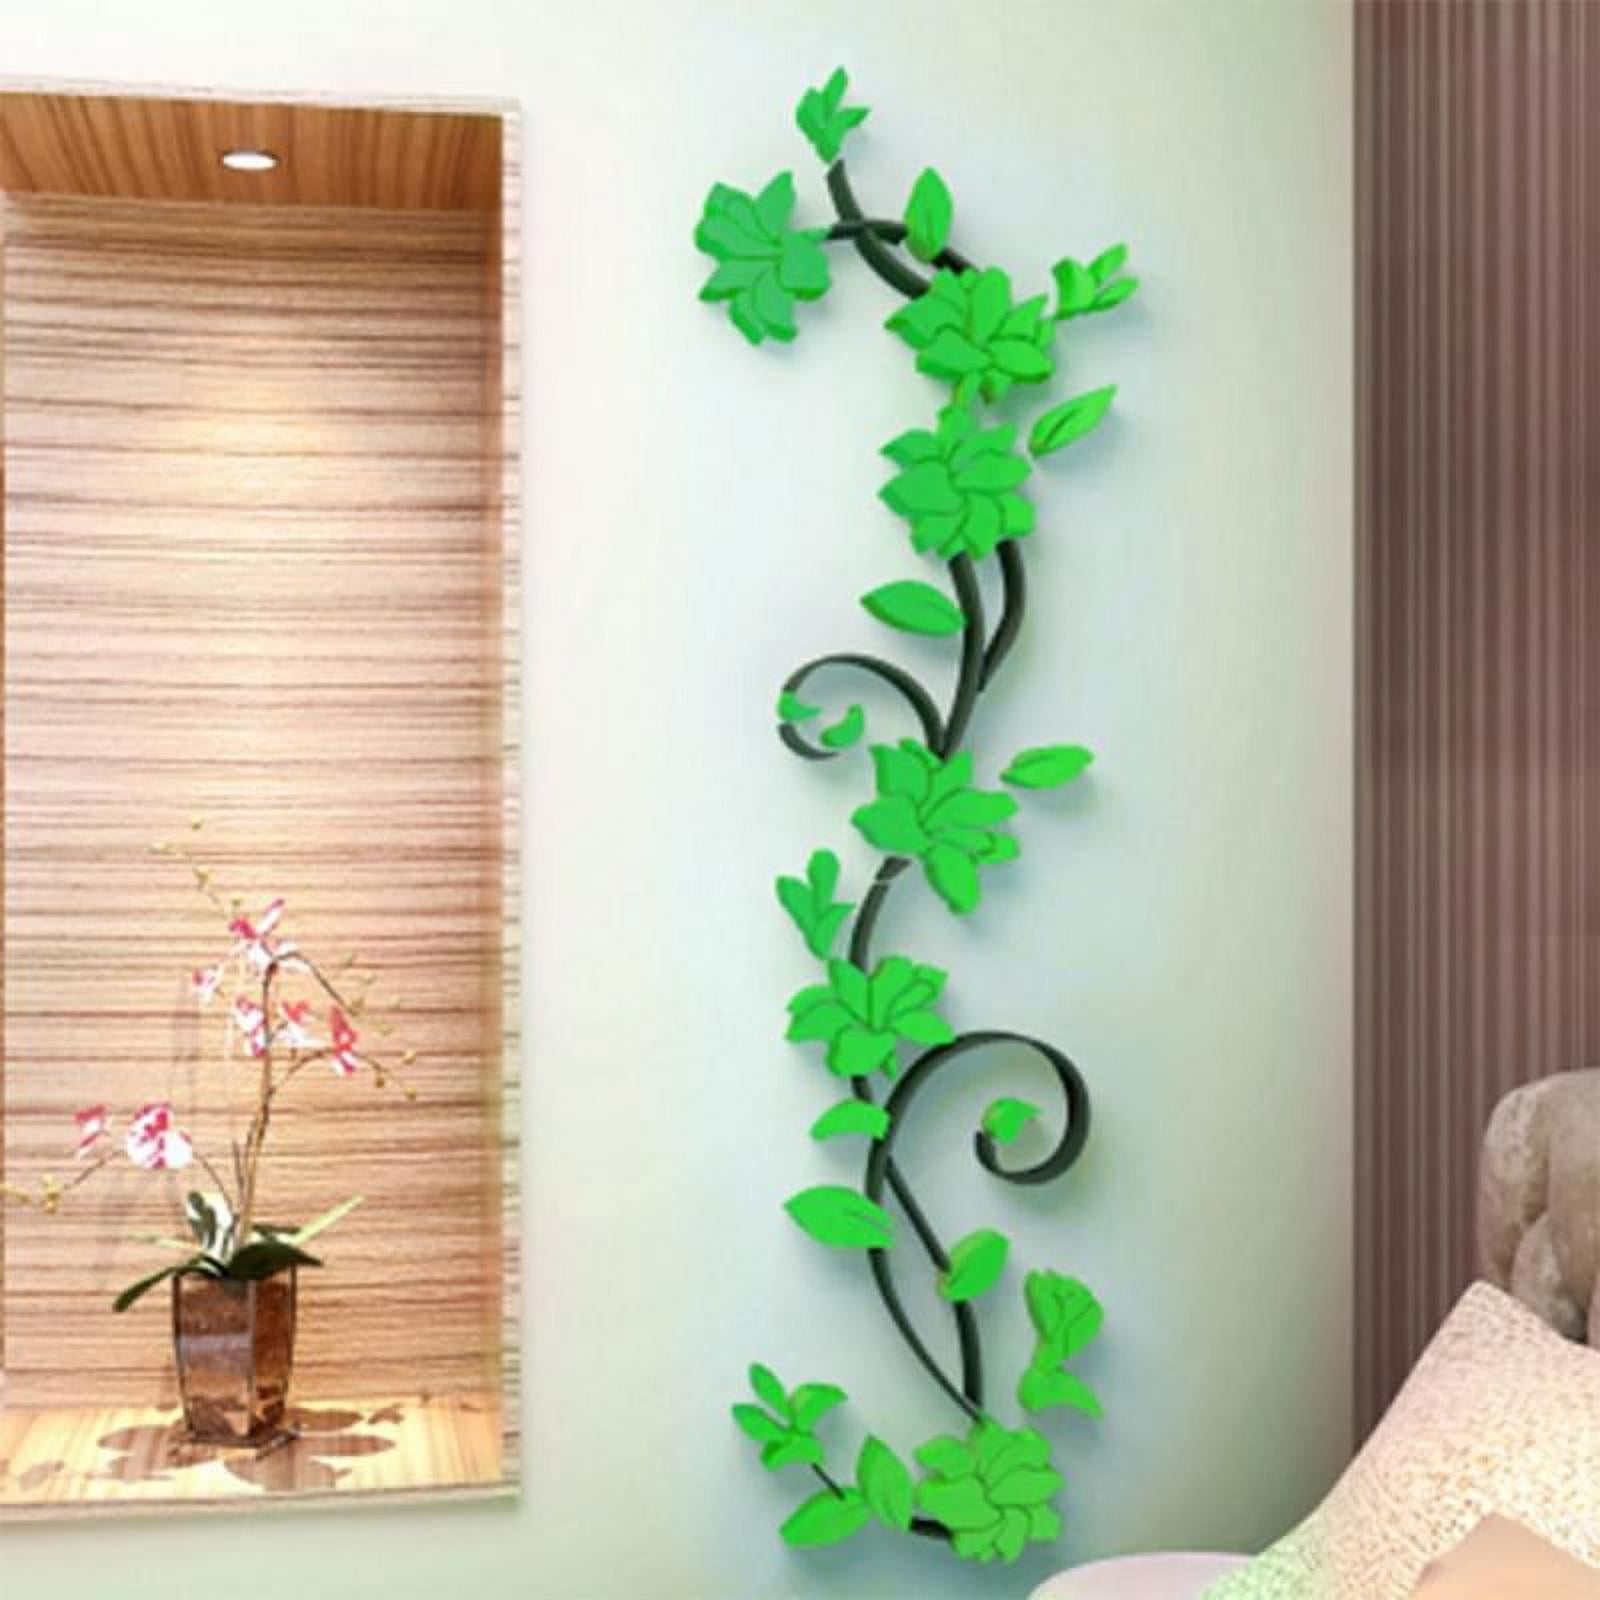 3D Flower Tree Home Room Art Decor DIY Wall Sticker Removable Decal Vinyl Mu Fy 